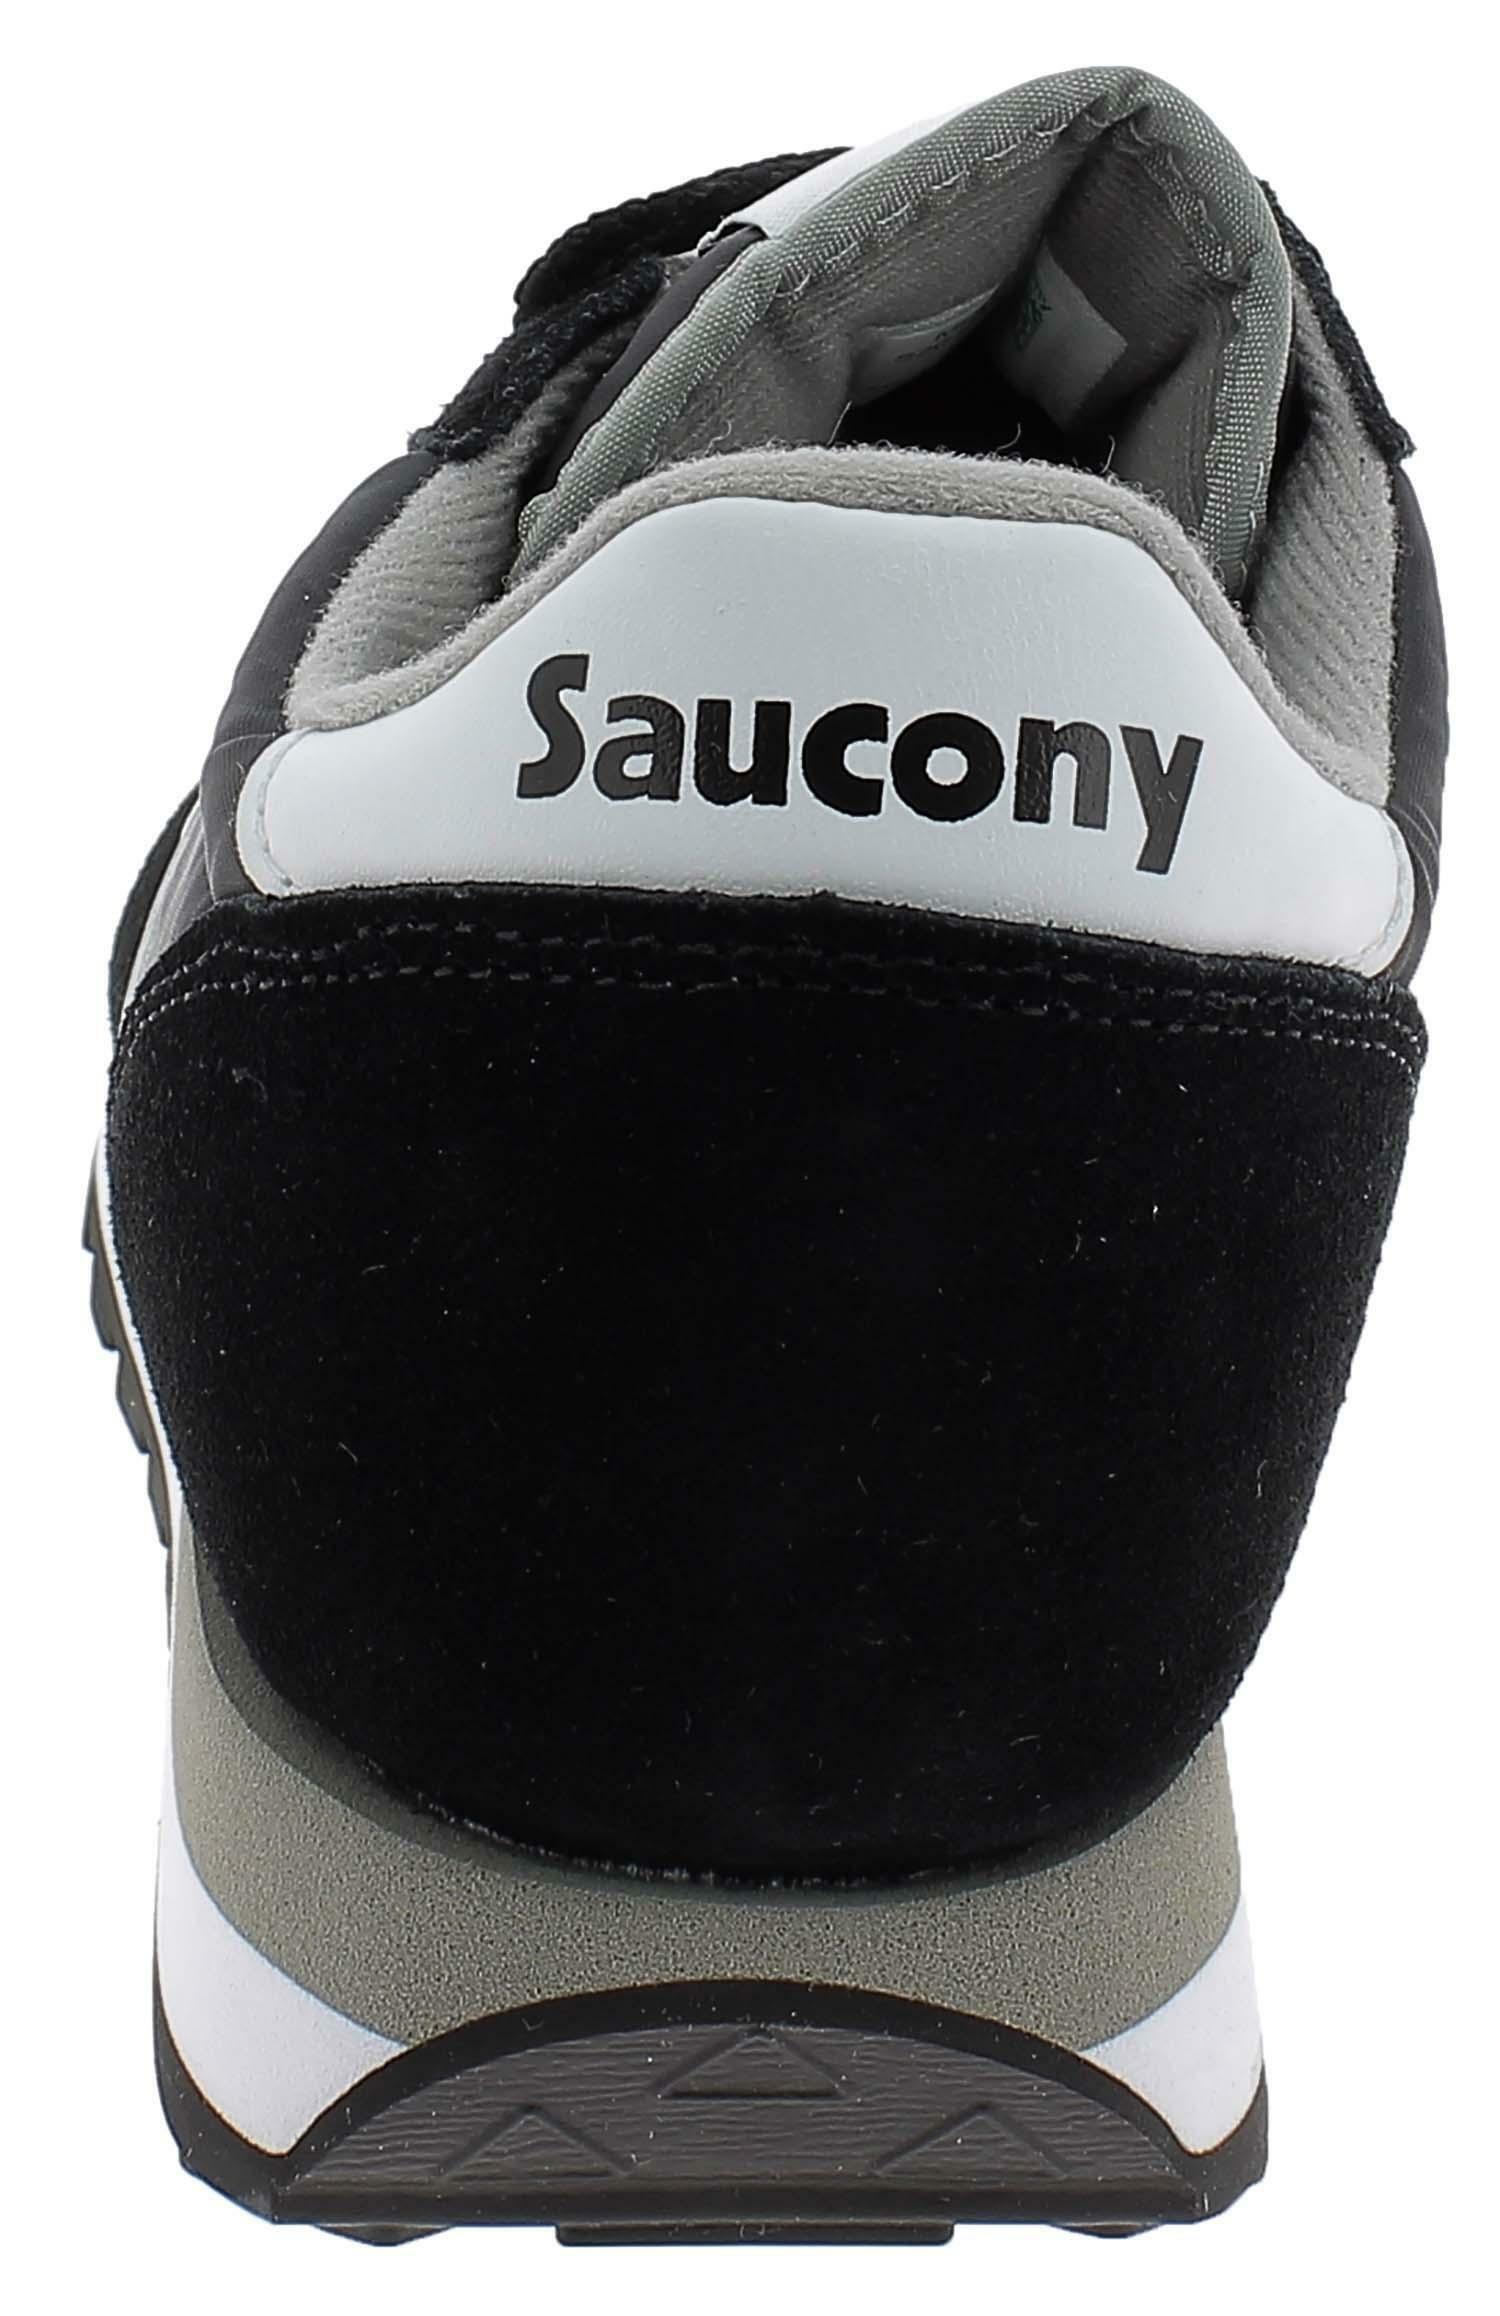 saucony saucony jazz original scarpe sportive nere s2044449